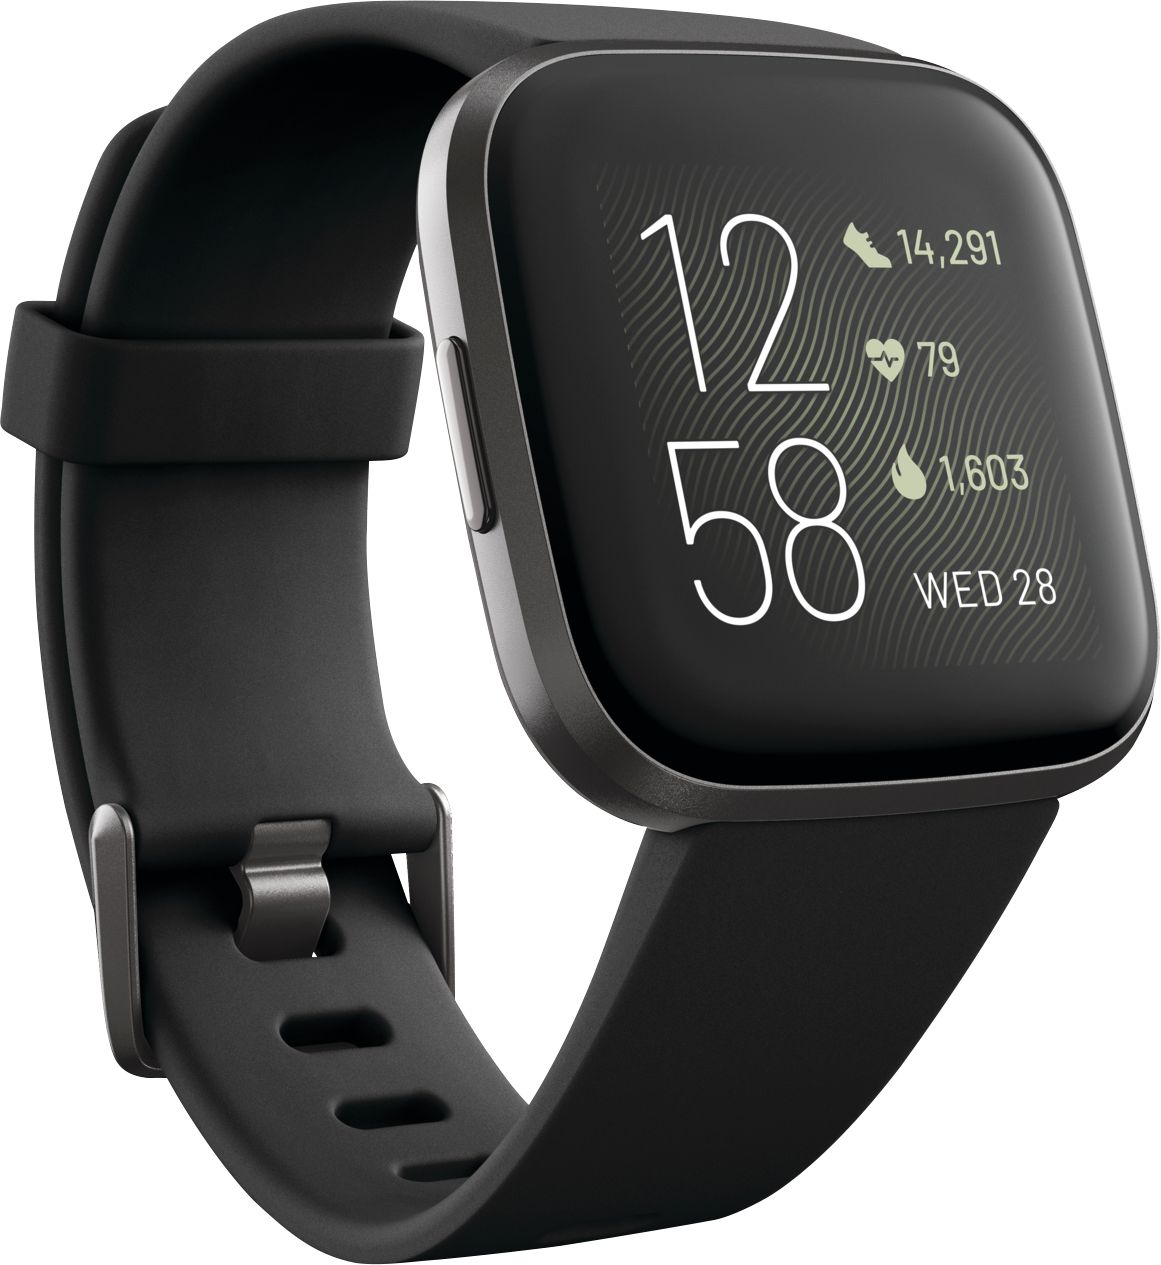 Fitbit - Versa 2 Health & Fitness Smartwatch $119.95